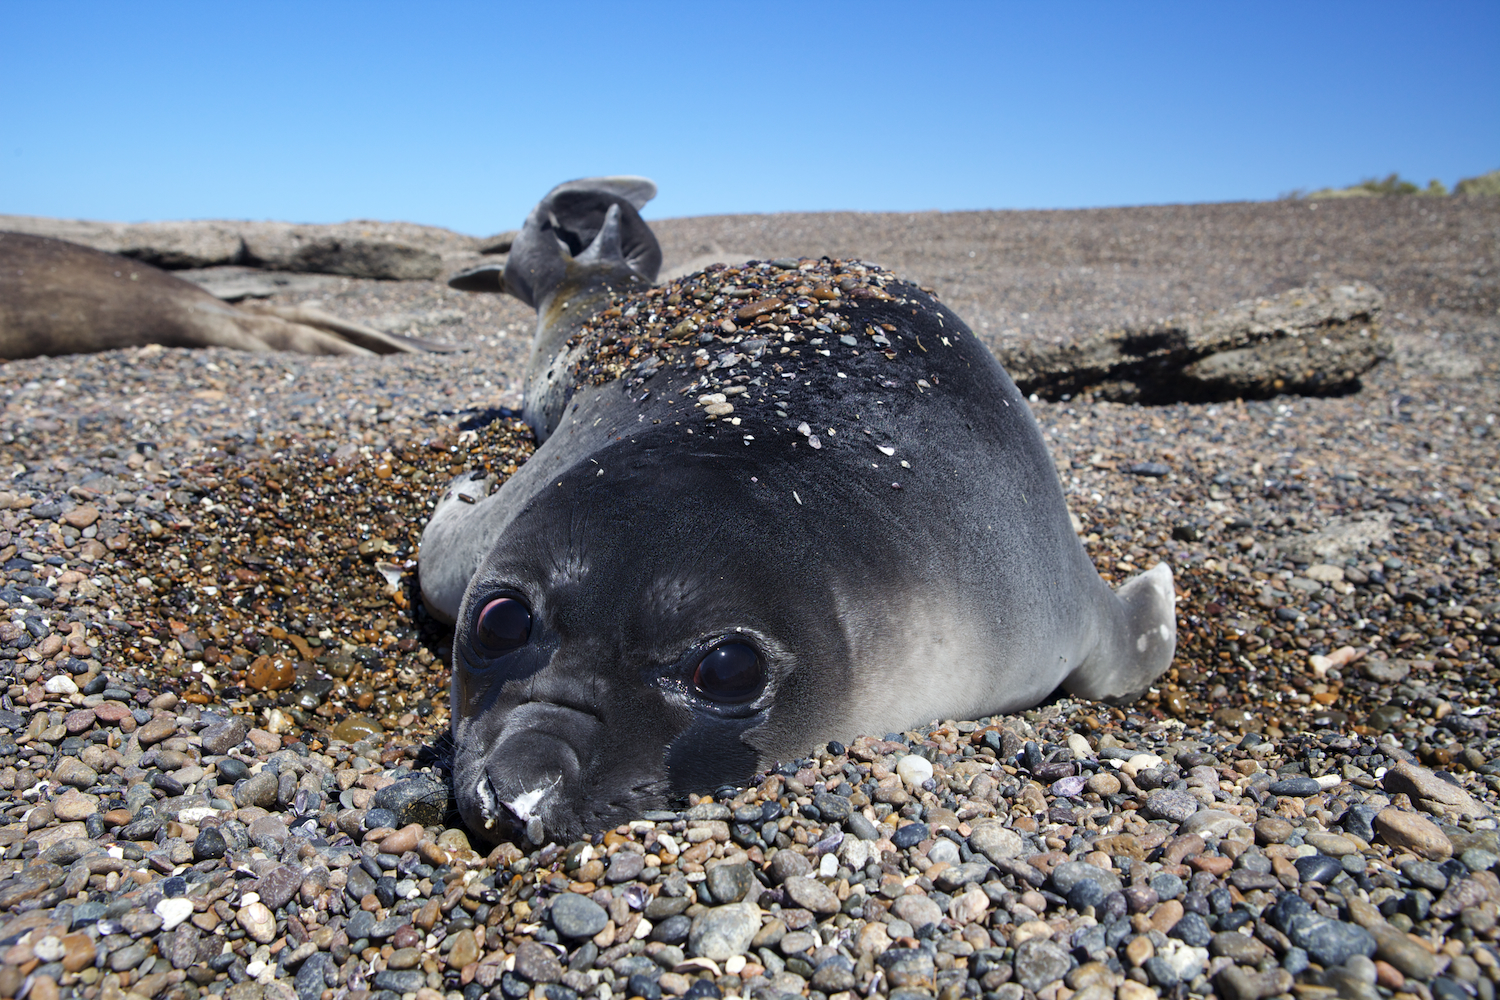 Elephant Seal pup along the coast of Patagonia, Argentina. (Credit © Keith Ellenbogen)